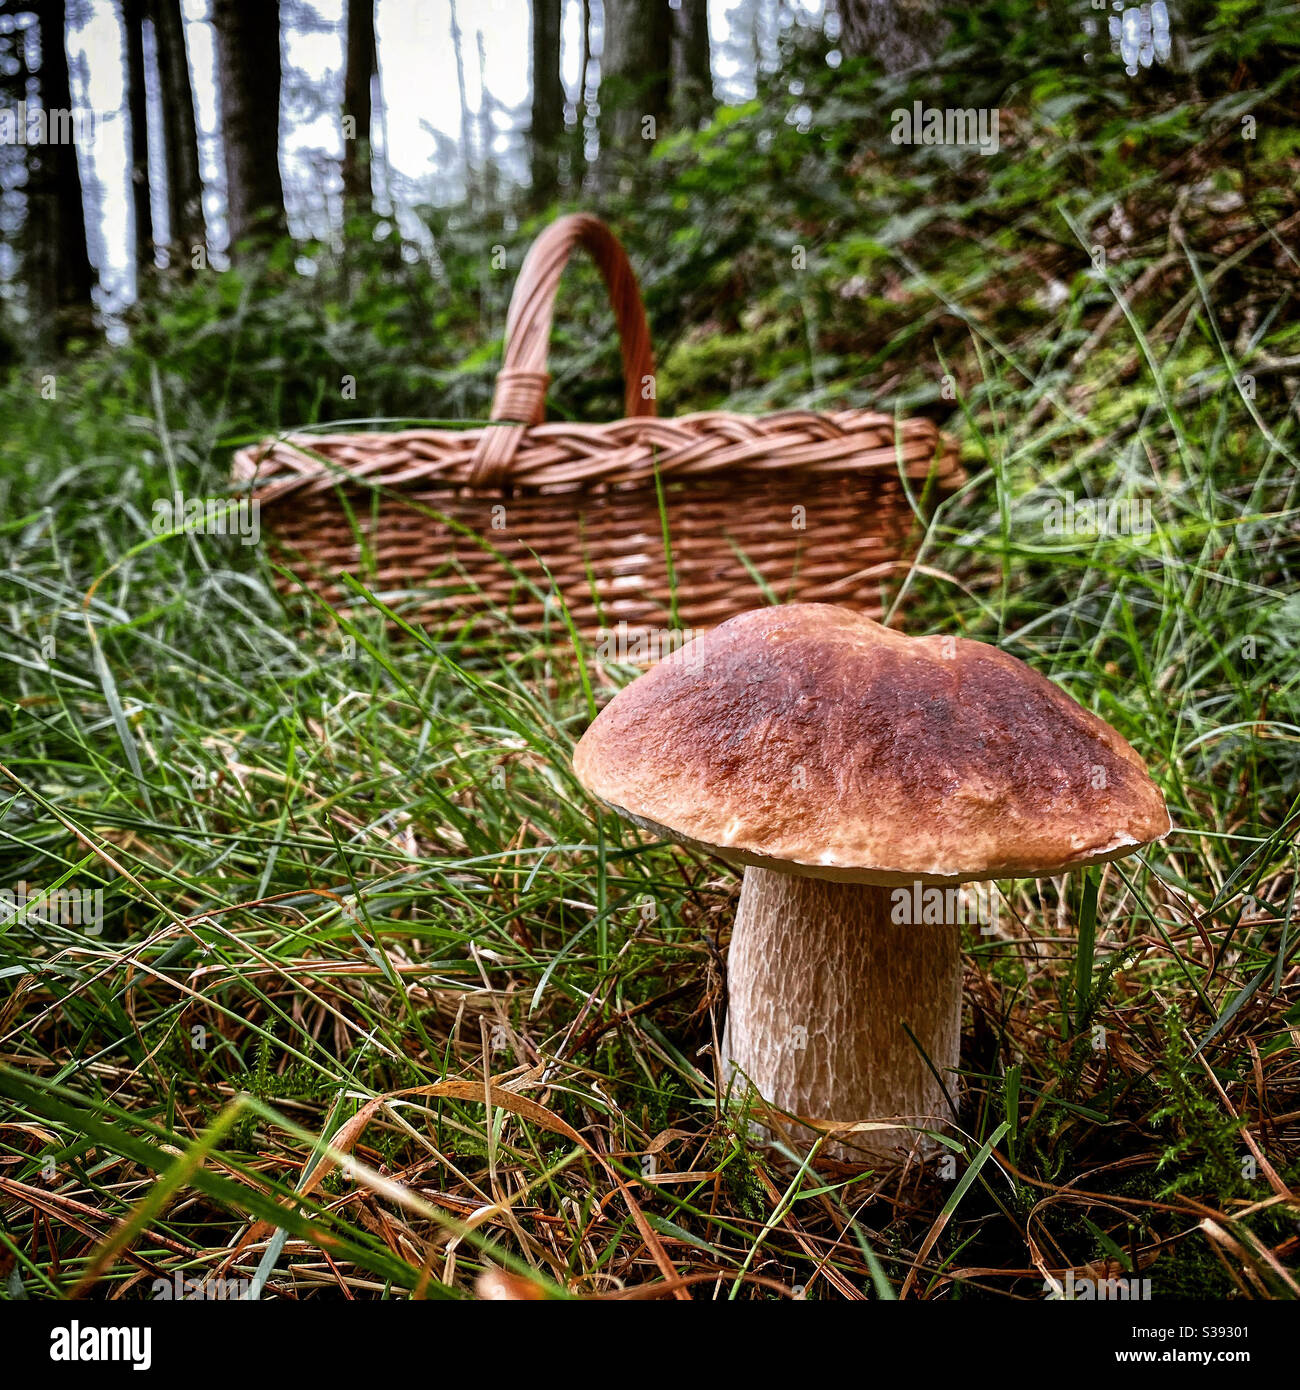 Penny Bun/Porcini mushroom Stock Photo